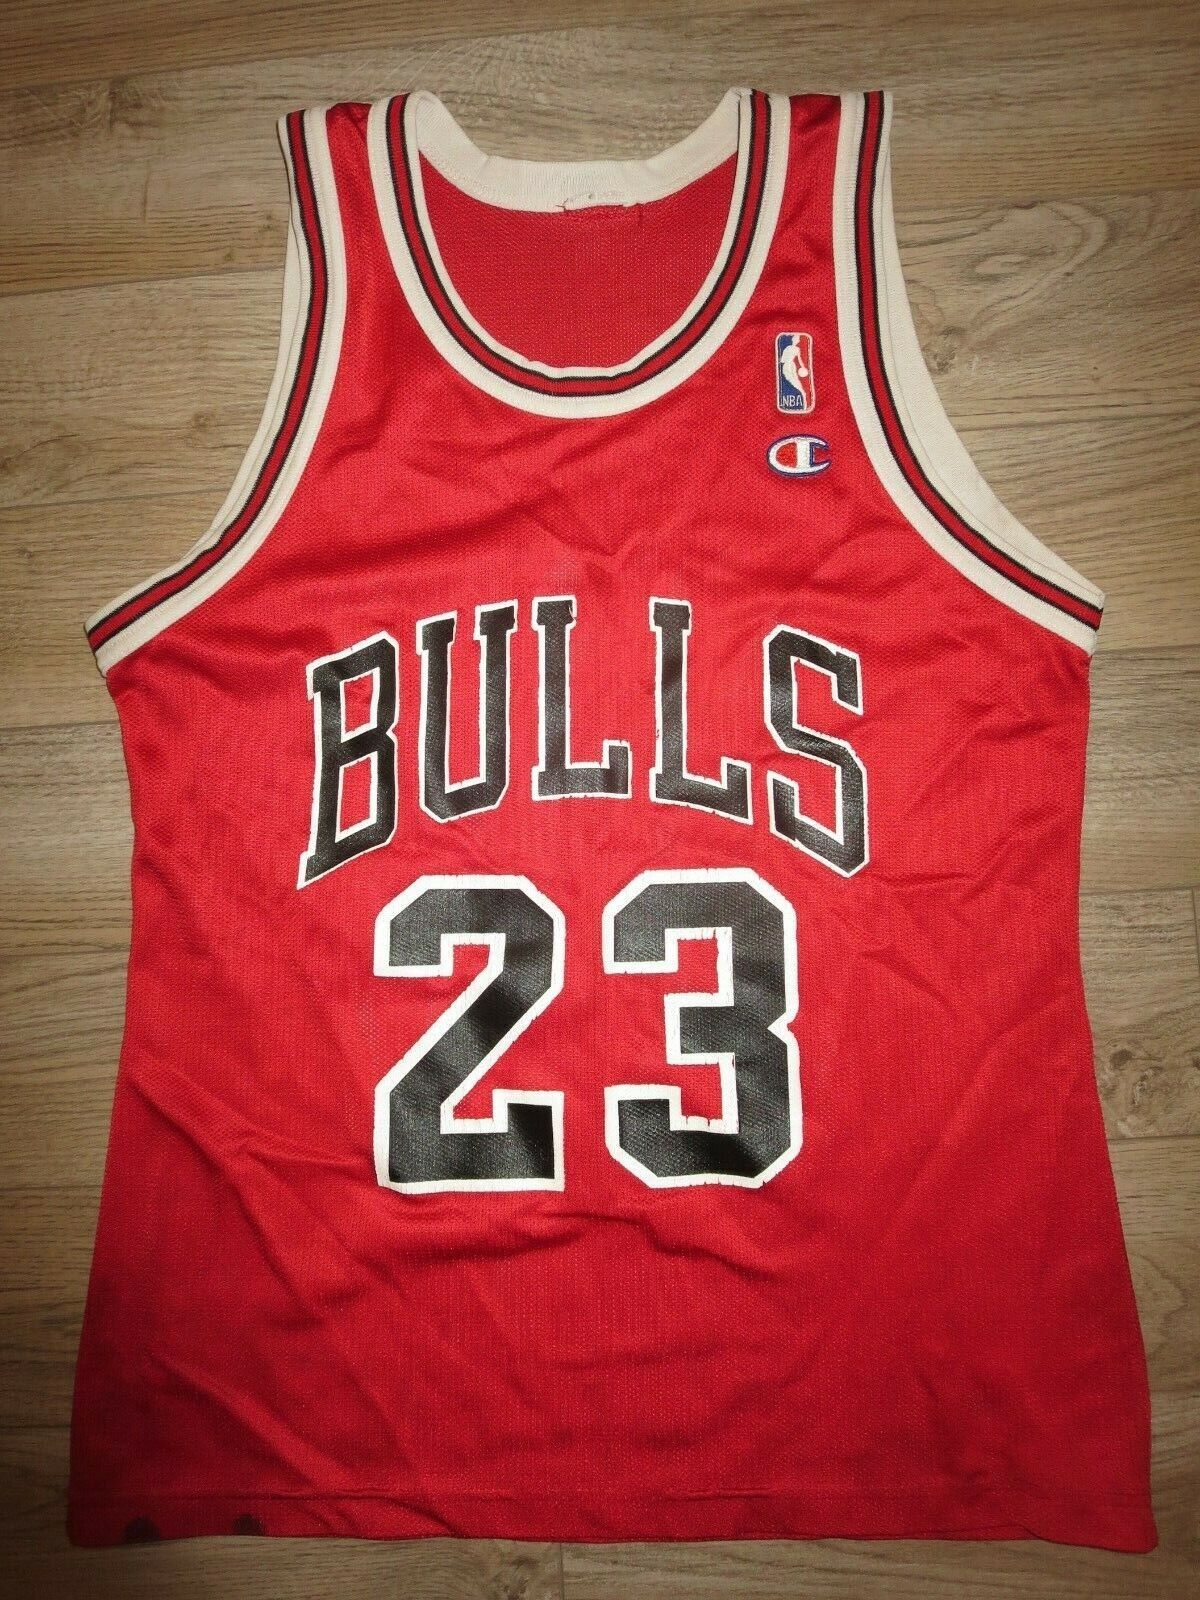 1993 chicago bulls jersey